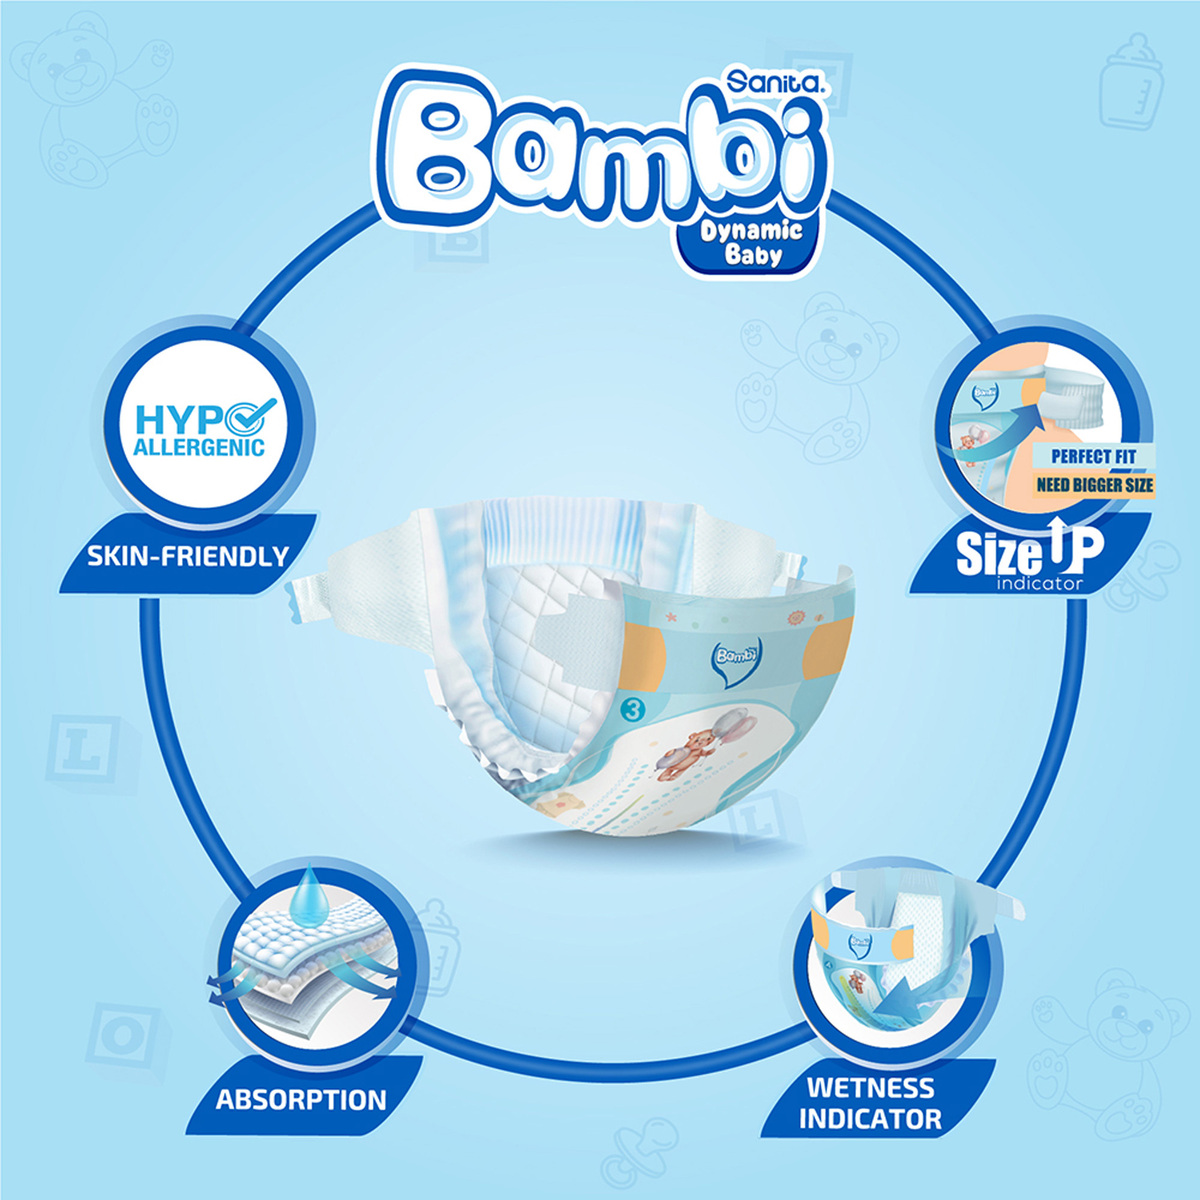 Sanita Bambi Baby Diaper Value Pack Size 3 Medium 6-11kg 36 pcs